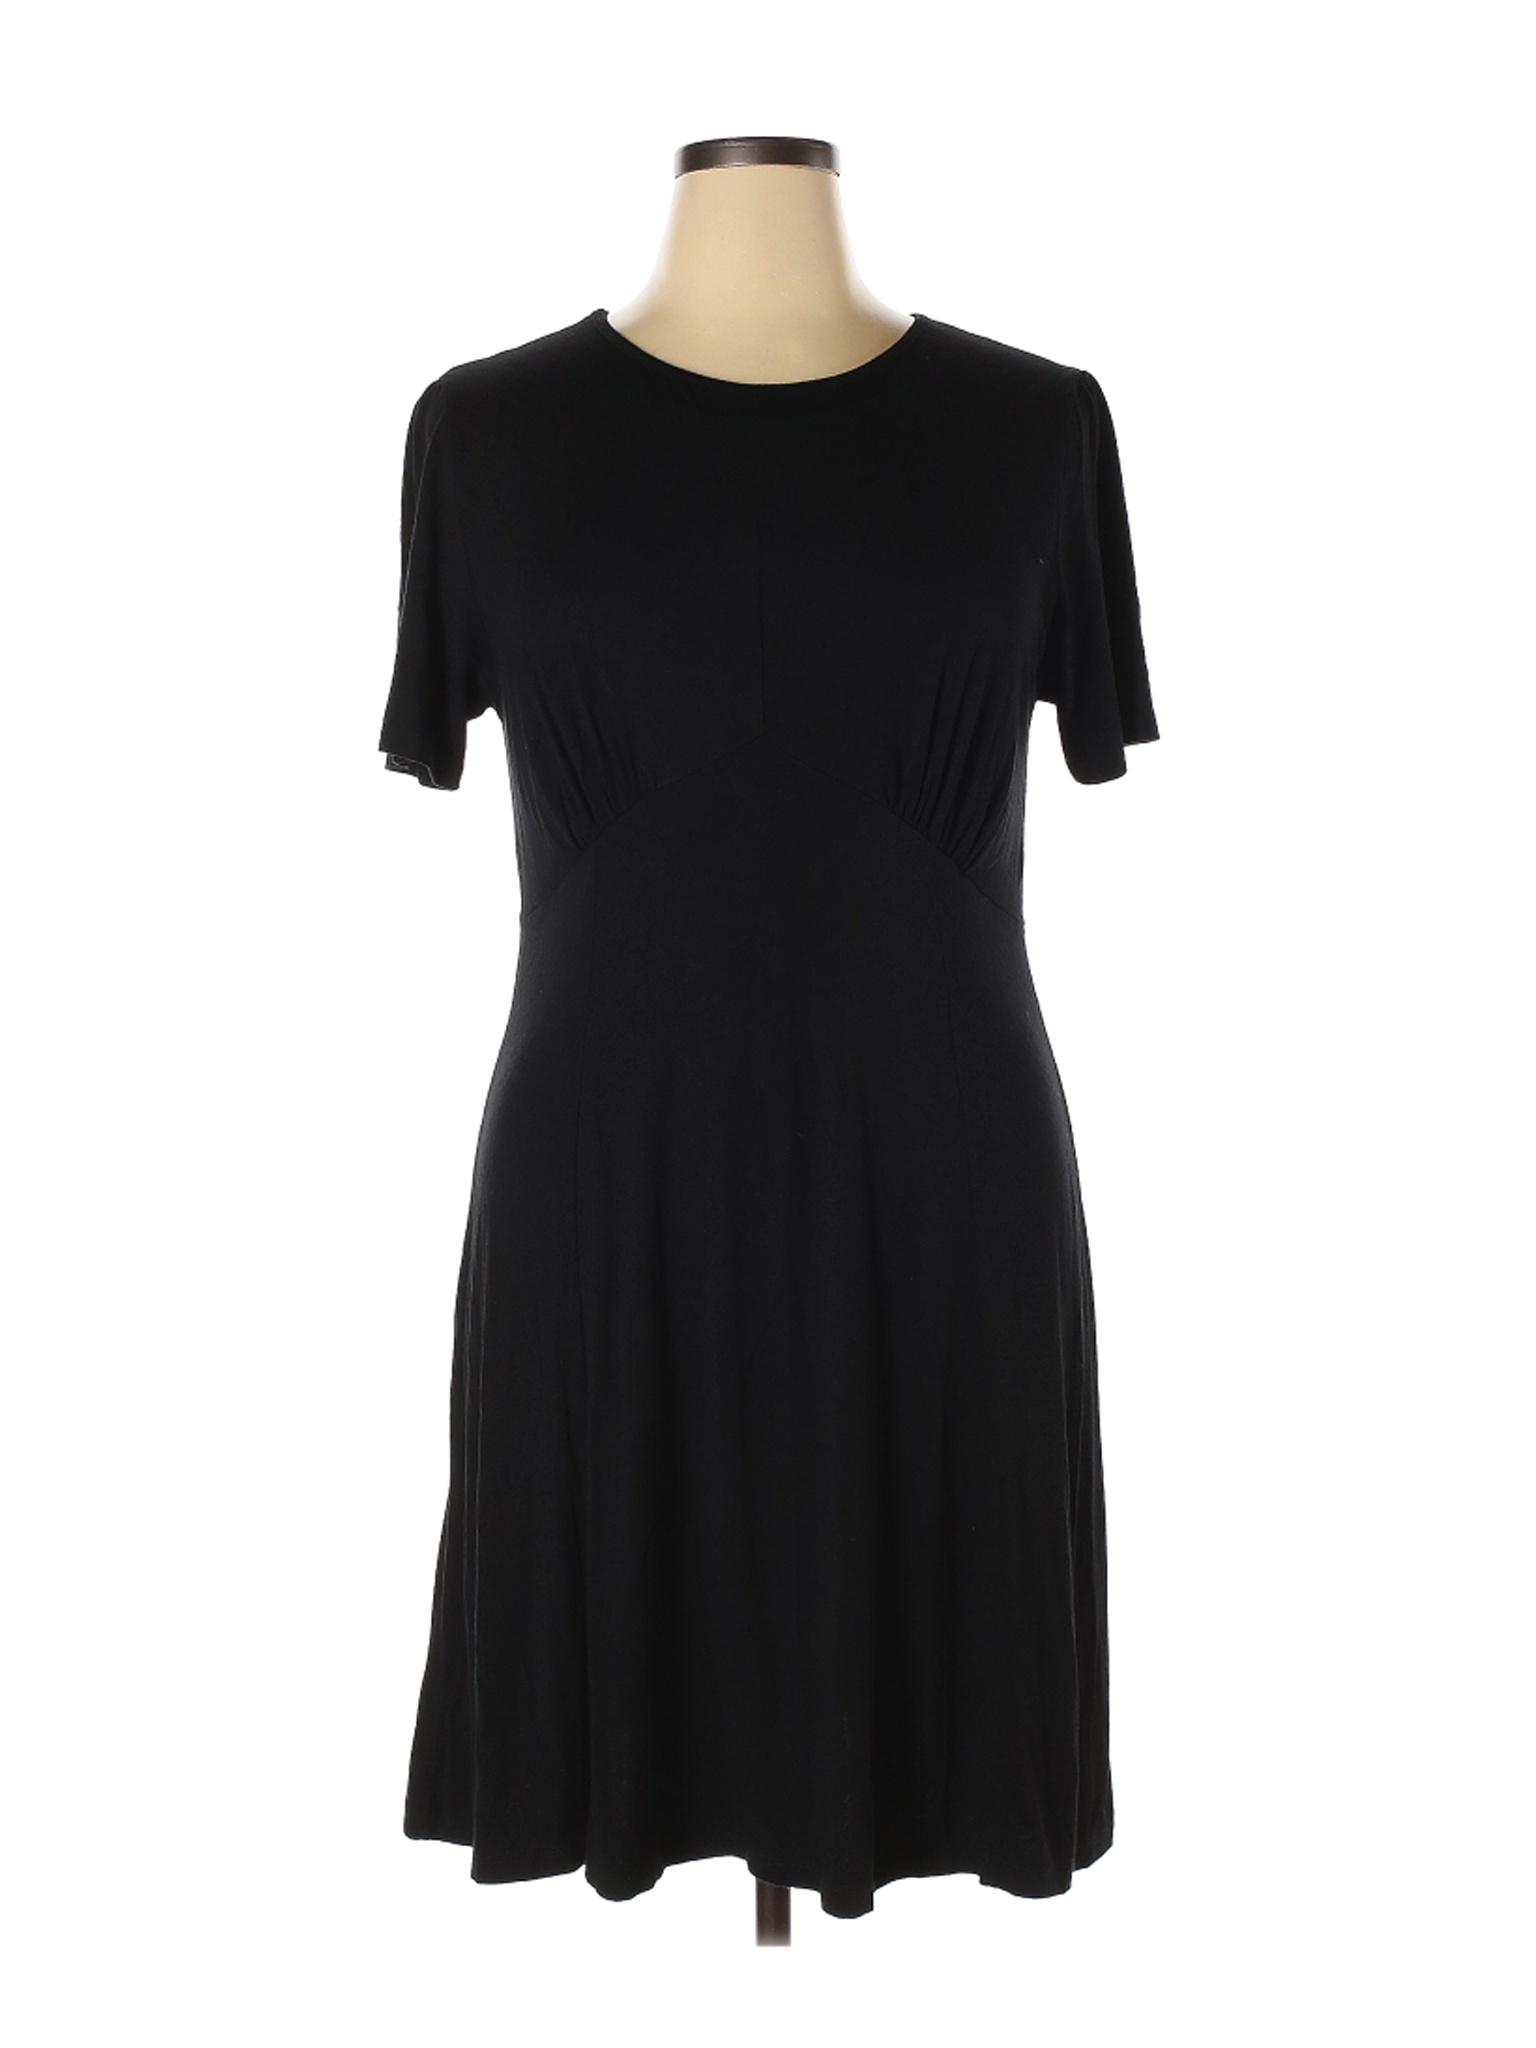 ASOS Women Black Casual Dress 16 | eBay